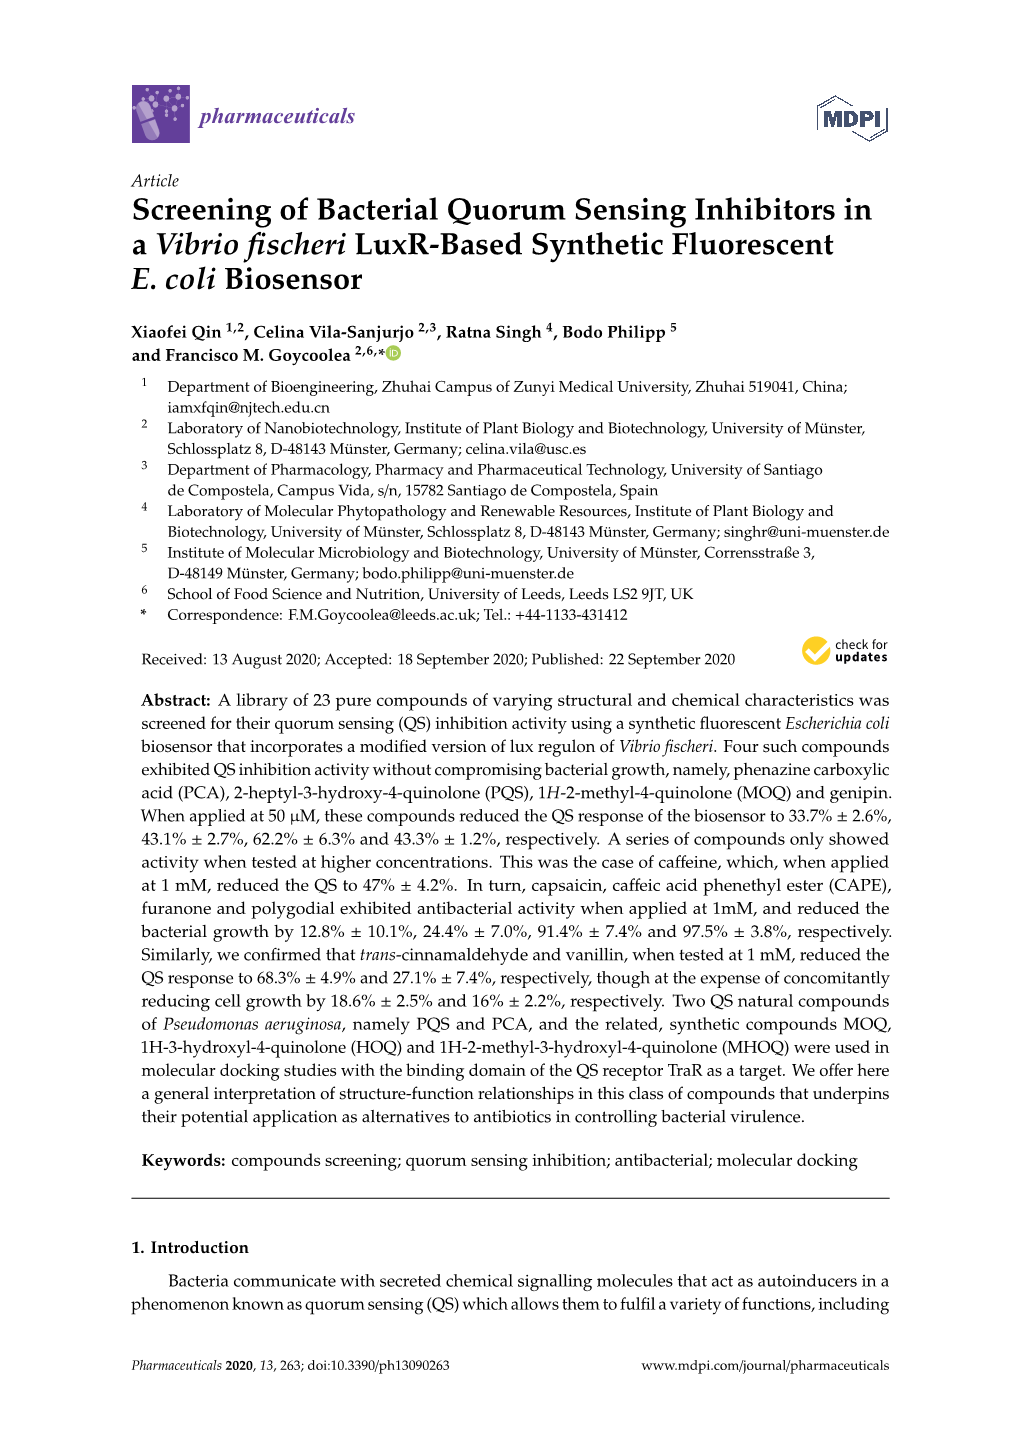 Screening of Bacterial Quorum Sensing Inhibitors in a Vibrio ﬁscheri Luxr-Based Synthetic Fluorescent E